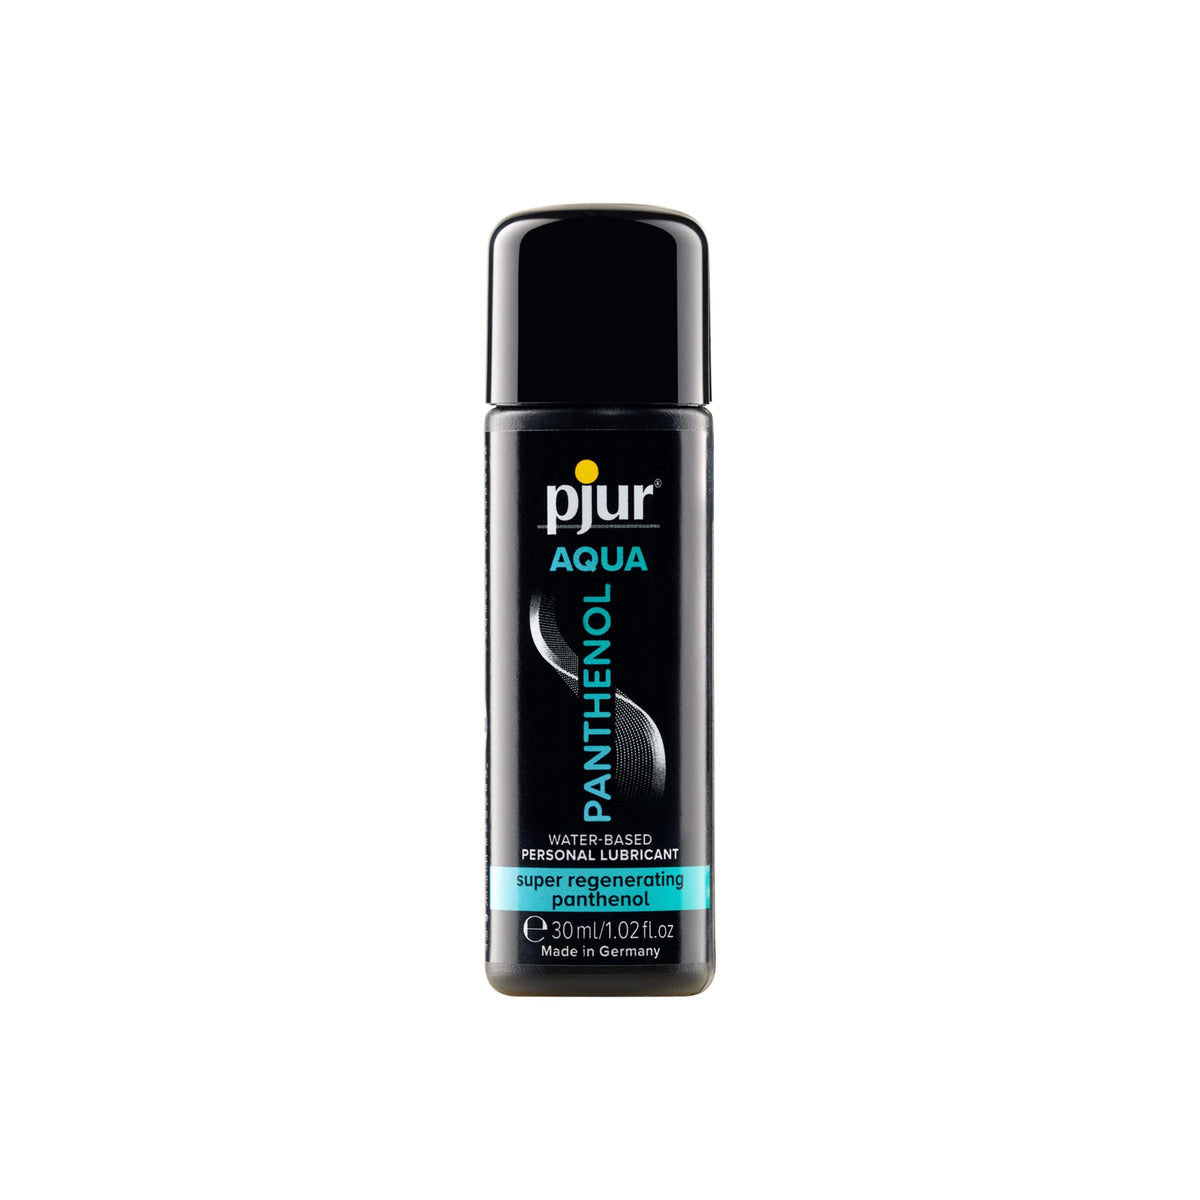 Pjur - Aqua Panthenol Water Based Personal Lubricant 30ml -  Lube (Water Based)  Durio.sg